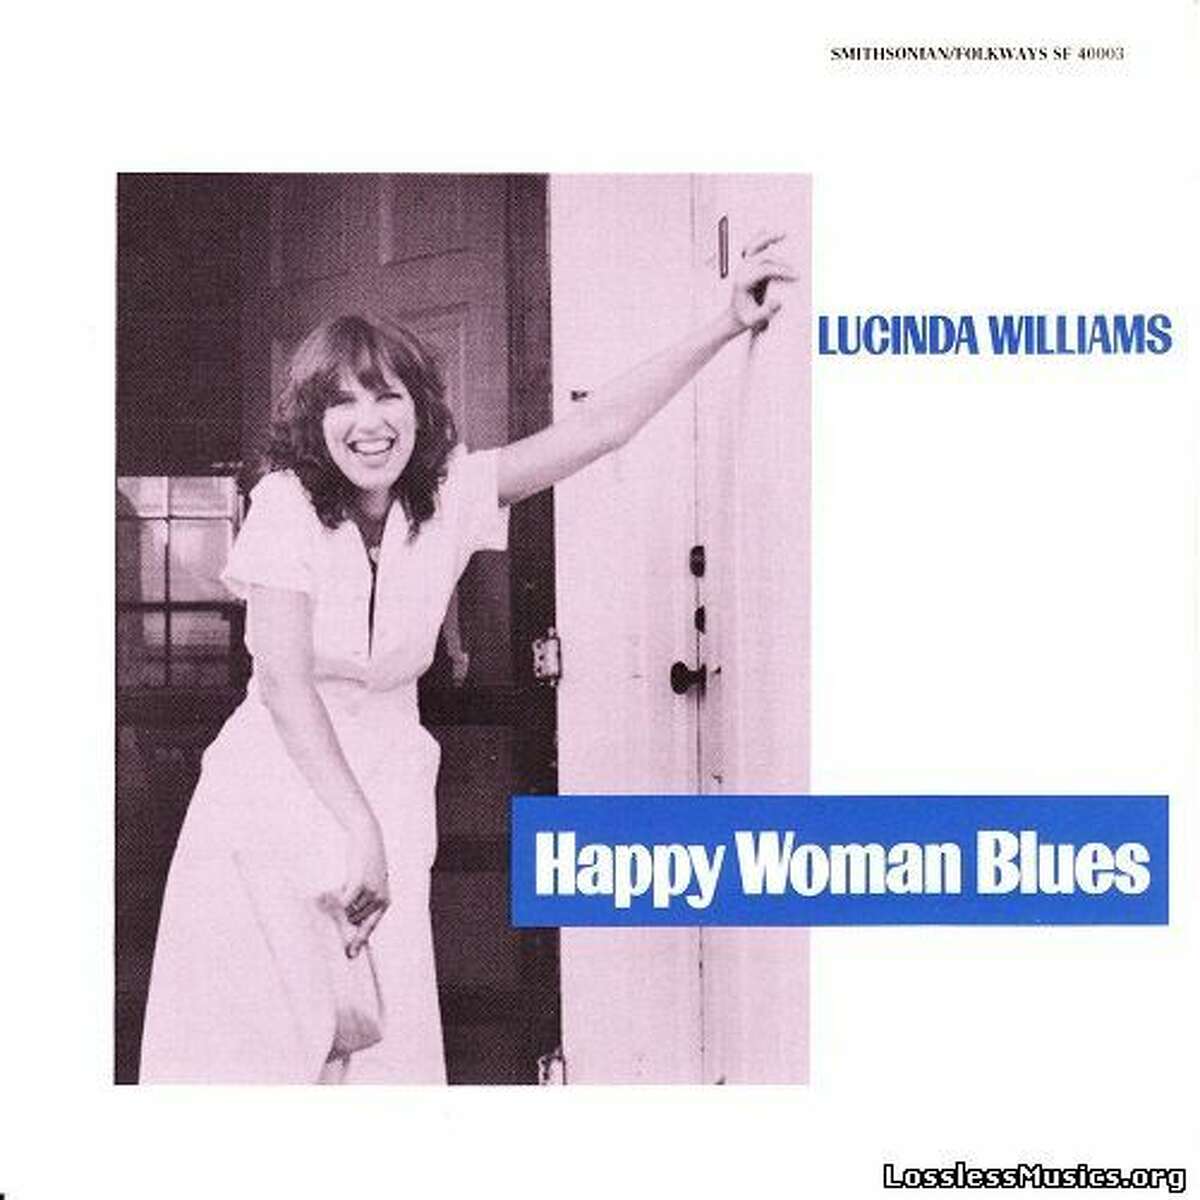 Люсинда Уильямс. Lucinda Williams albums. Lucinda Williams CD albums обложка. Lucinda Williams в молодости. Песни happy williams